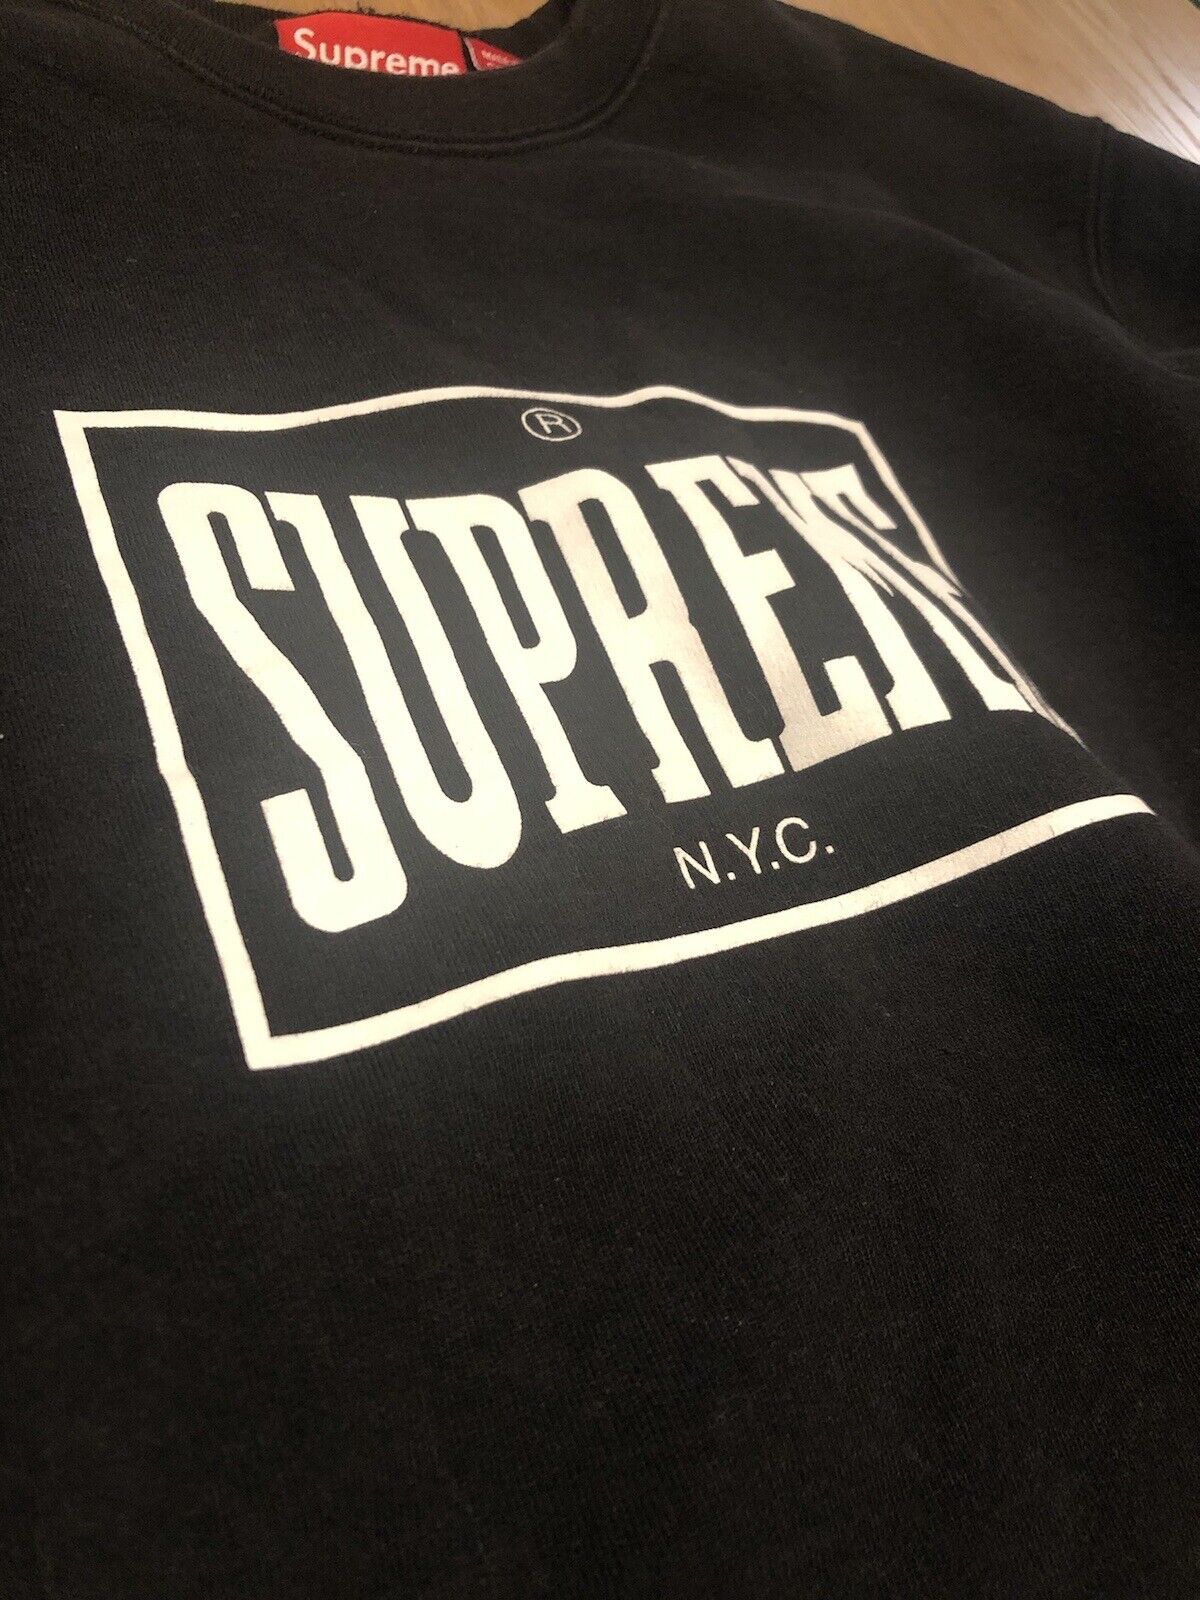 Supreme Everlast Box Logo Crew Neck Sweater size M Bl… - Gem